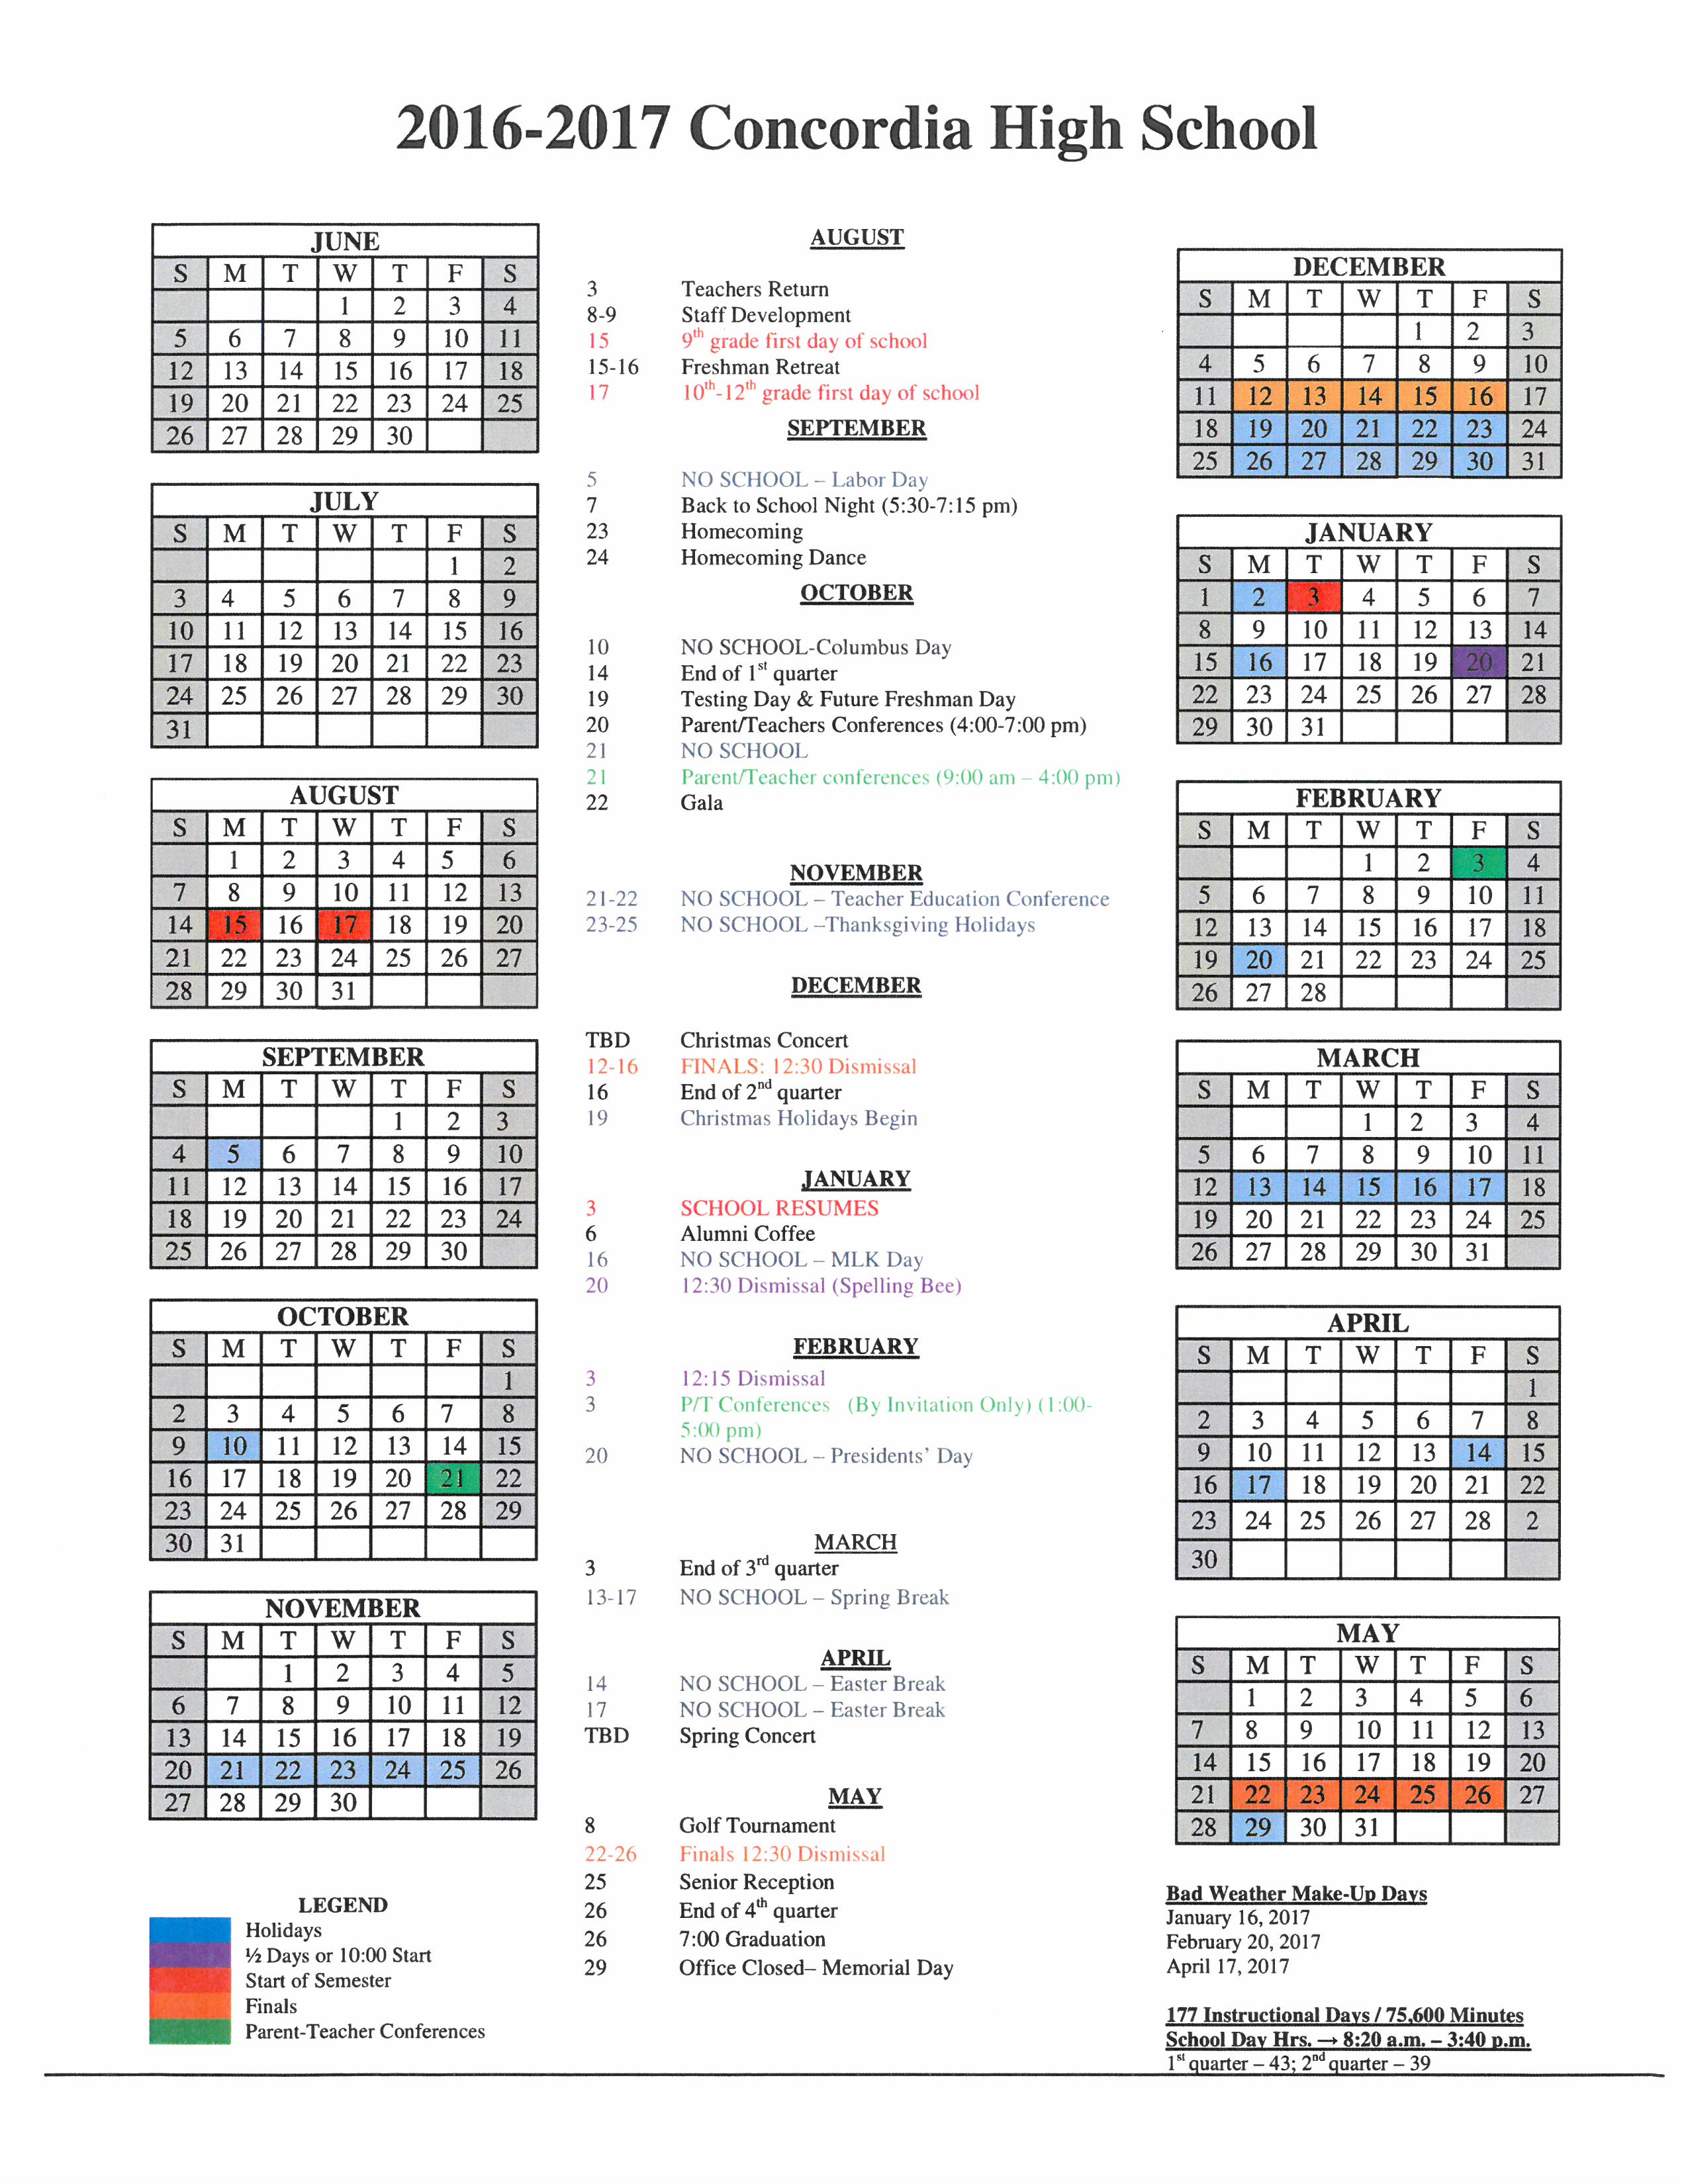 Concordia Academic Calendar Time Table